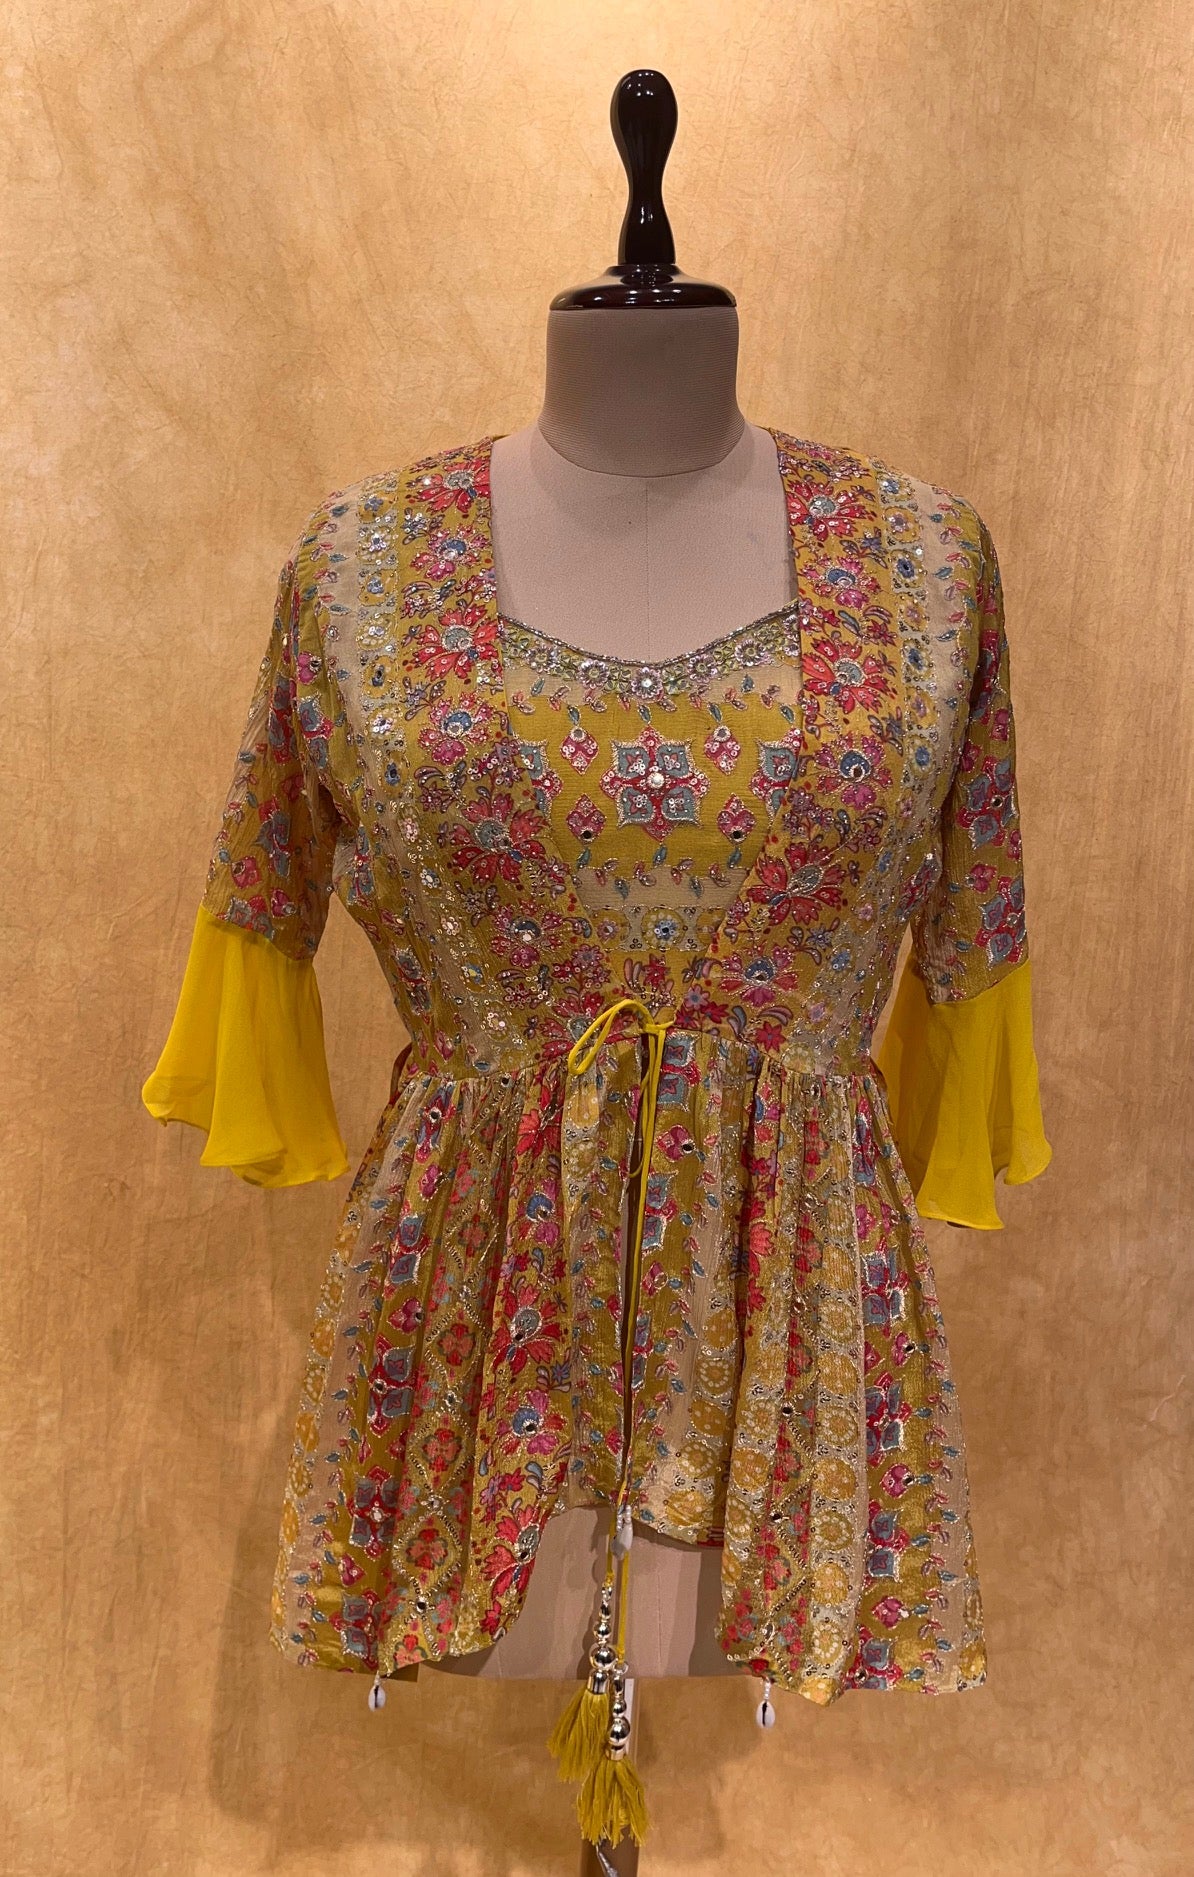 Lemon Yellow Printed Cotton Embroidered Maxi Dress, मुद्रित मैक्सी ड्रेस -  raisinglobal.com, Surat | ID: 27134904873